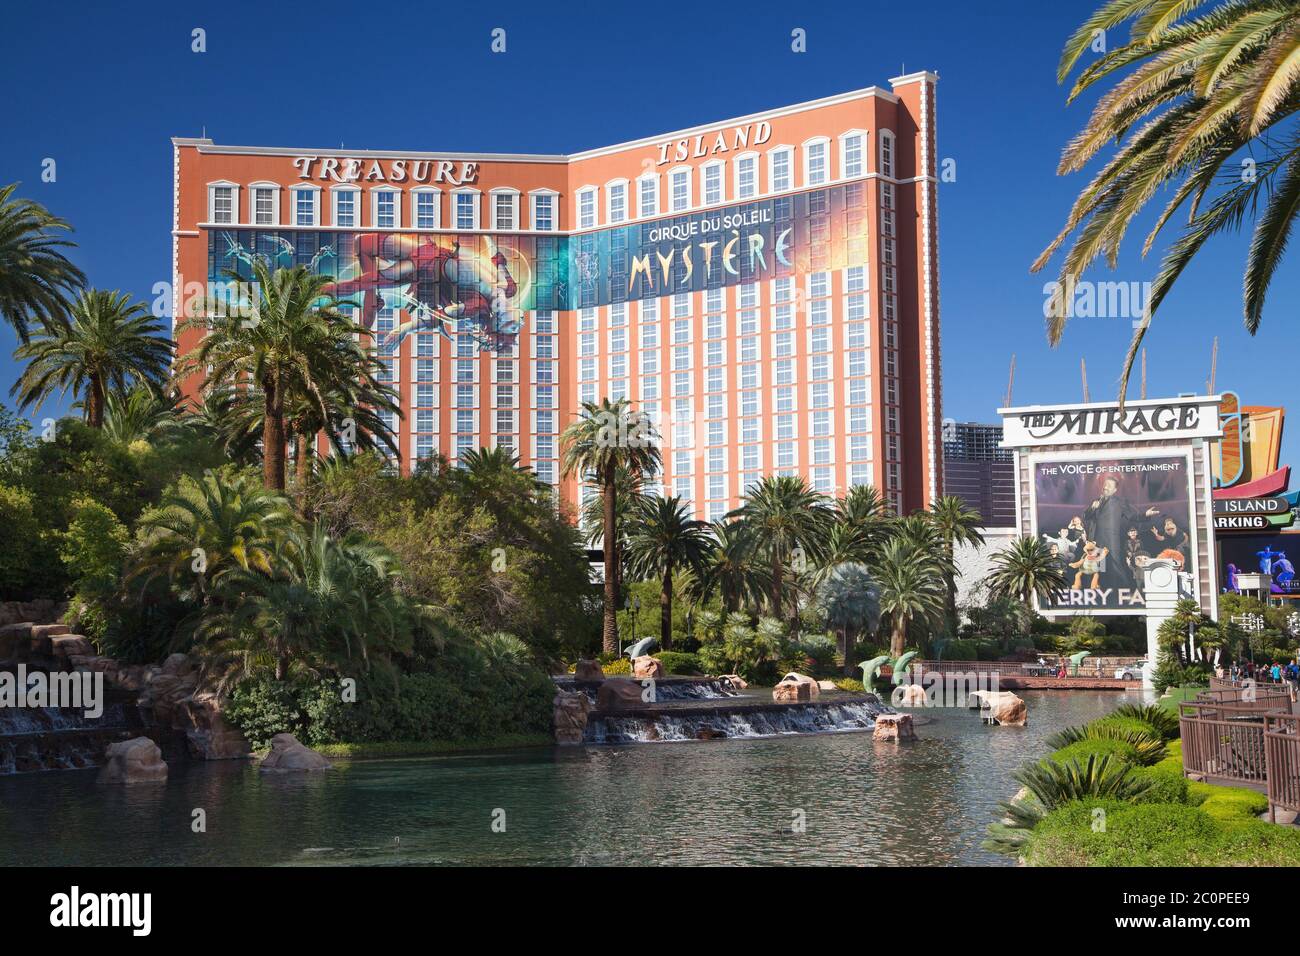 Las Vegas, Nevada - August 30, 2019: Treasure Island Hotel and Casino in Las Vegas, Nevada, United States. Stock Photo